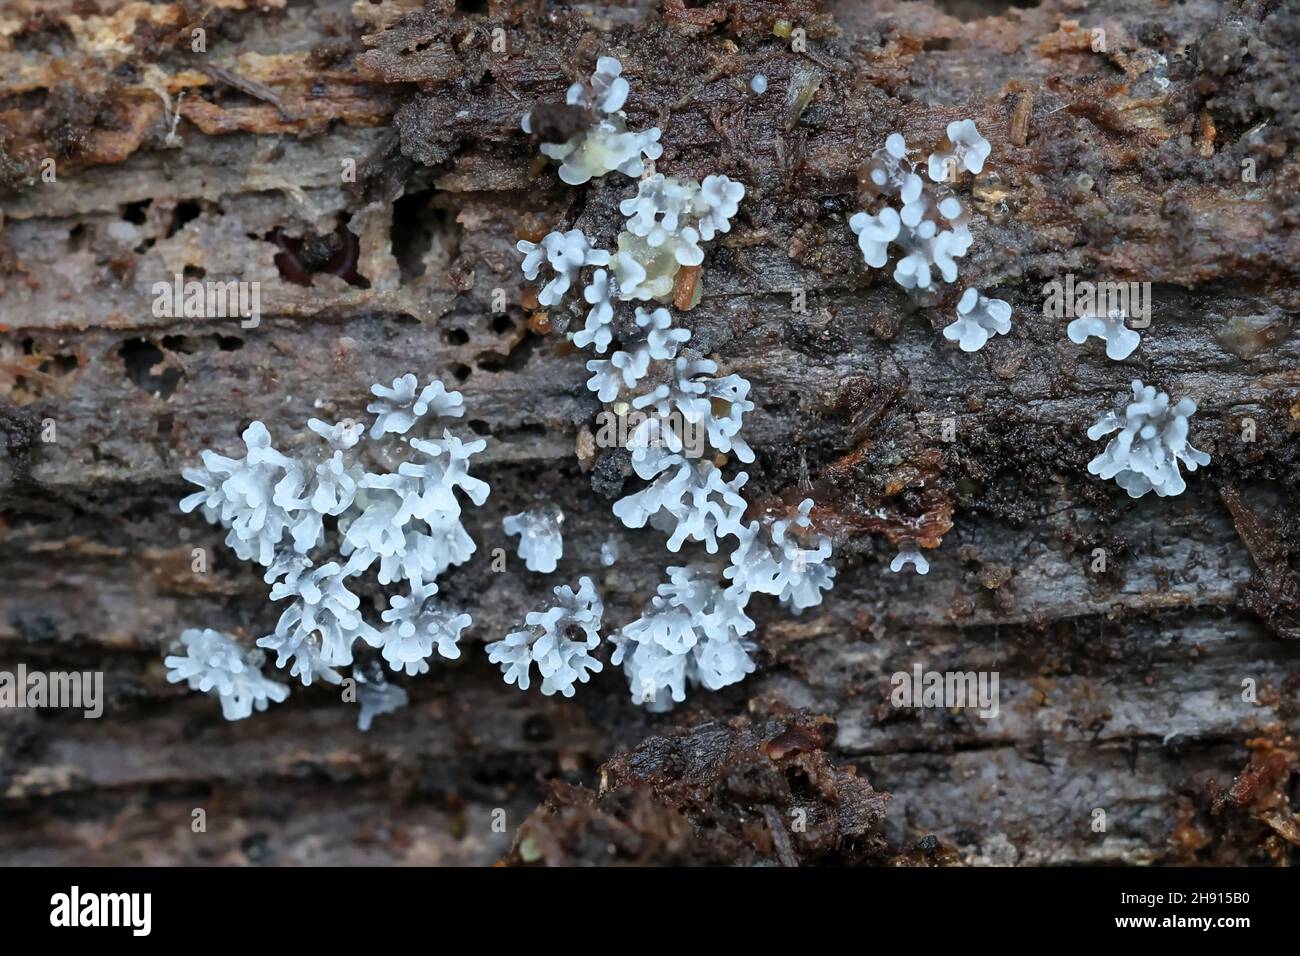 White coral slime mold, Ceratiomyxa fruticulosa, early development phase Stock Photo